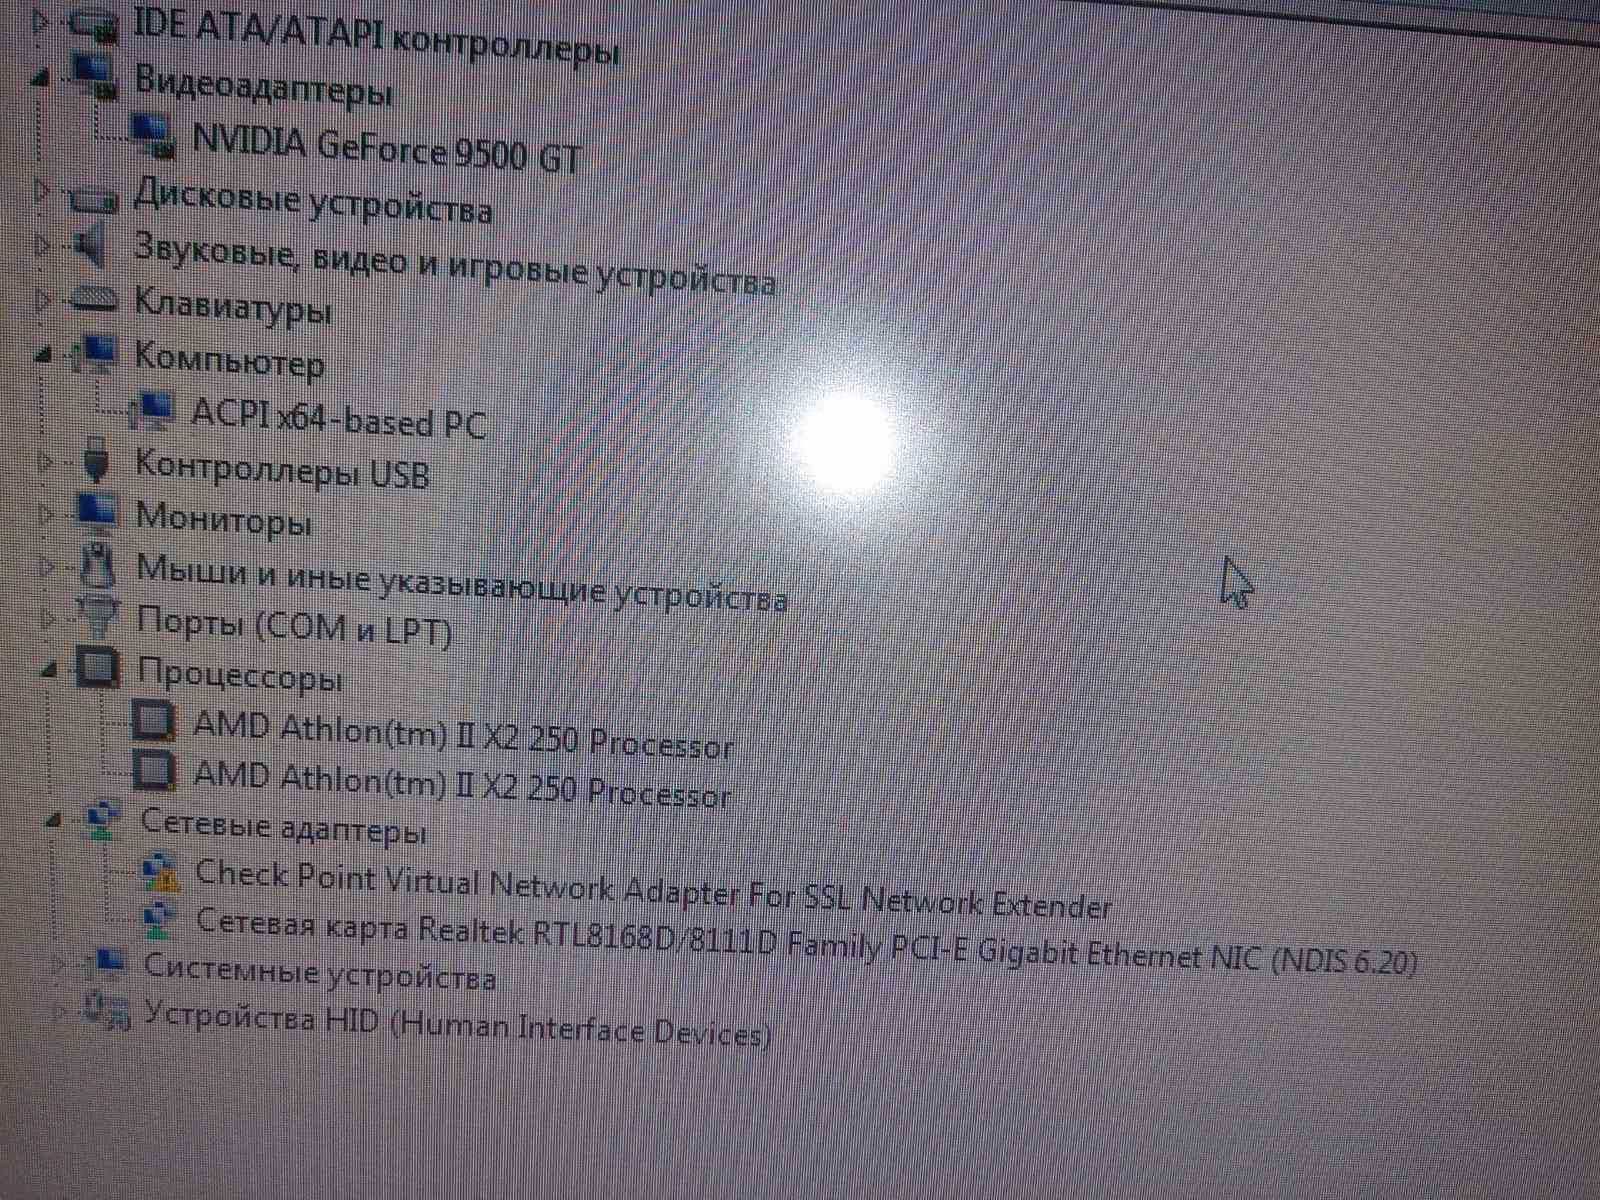 ПК Athlon II X2 Dual Core 4Gb NVIDIA GeForce9500GT 1 Гб